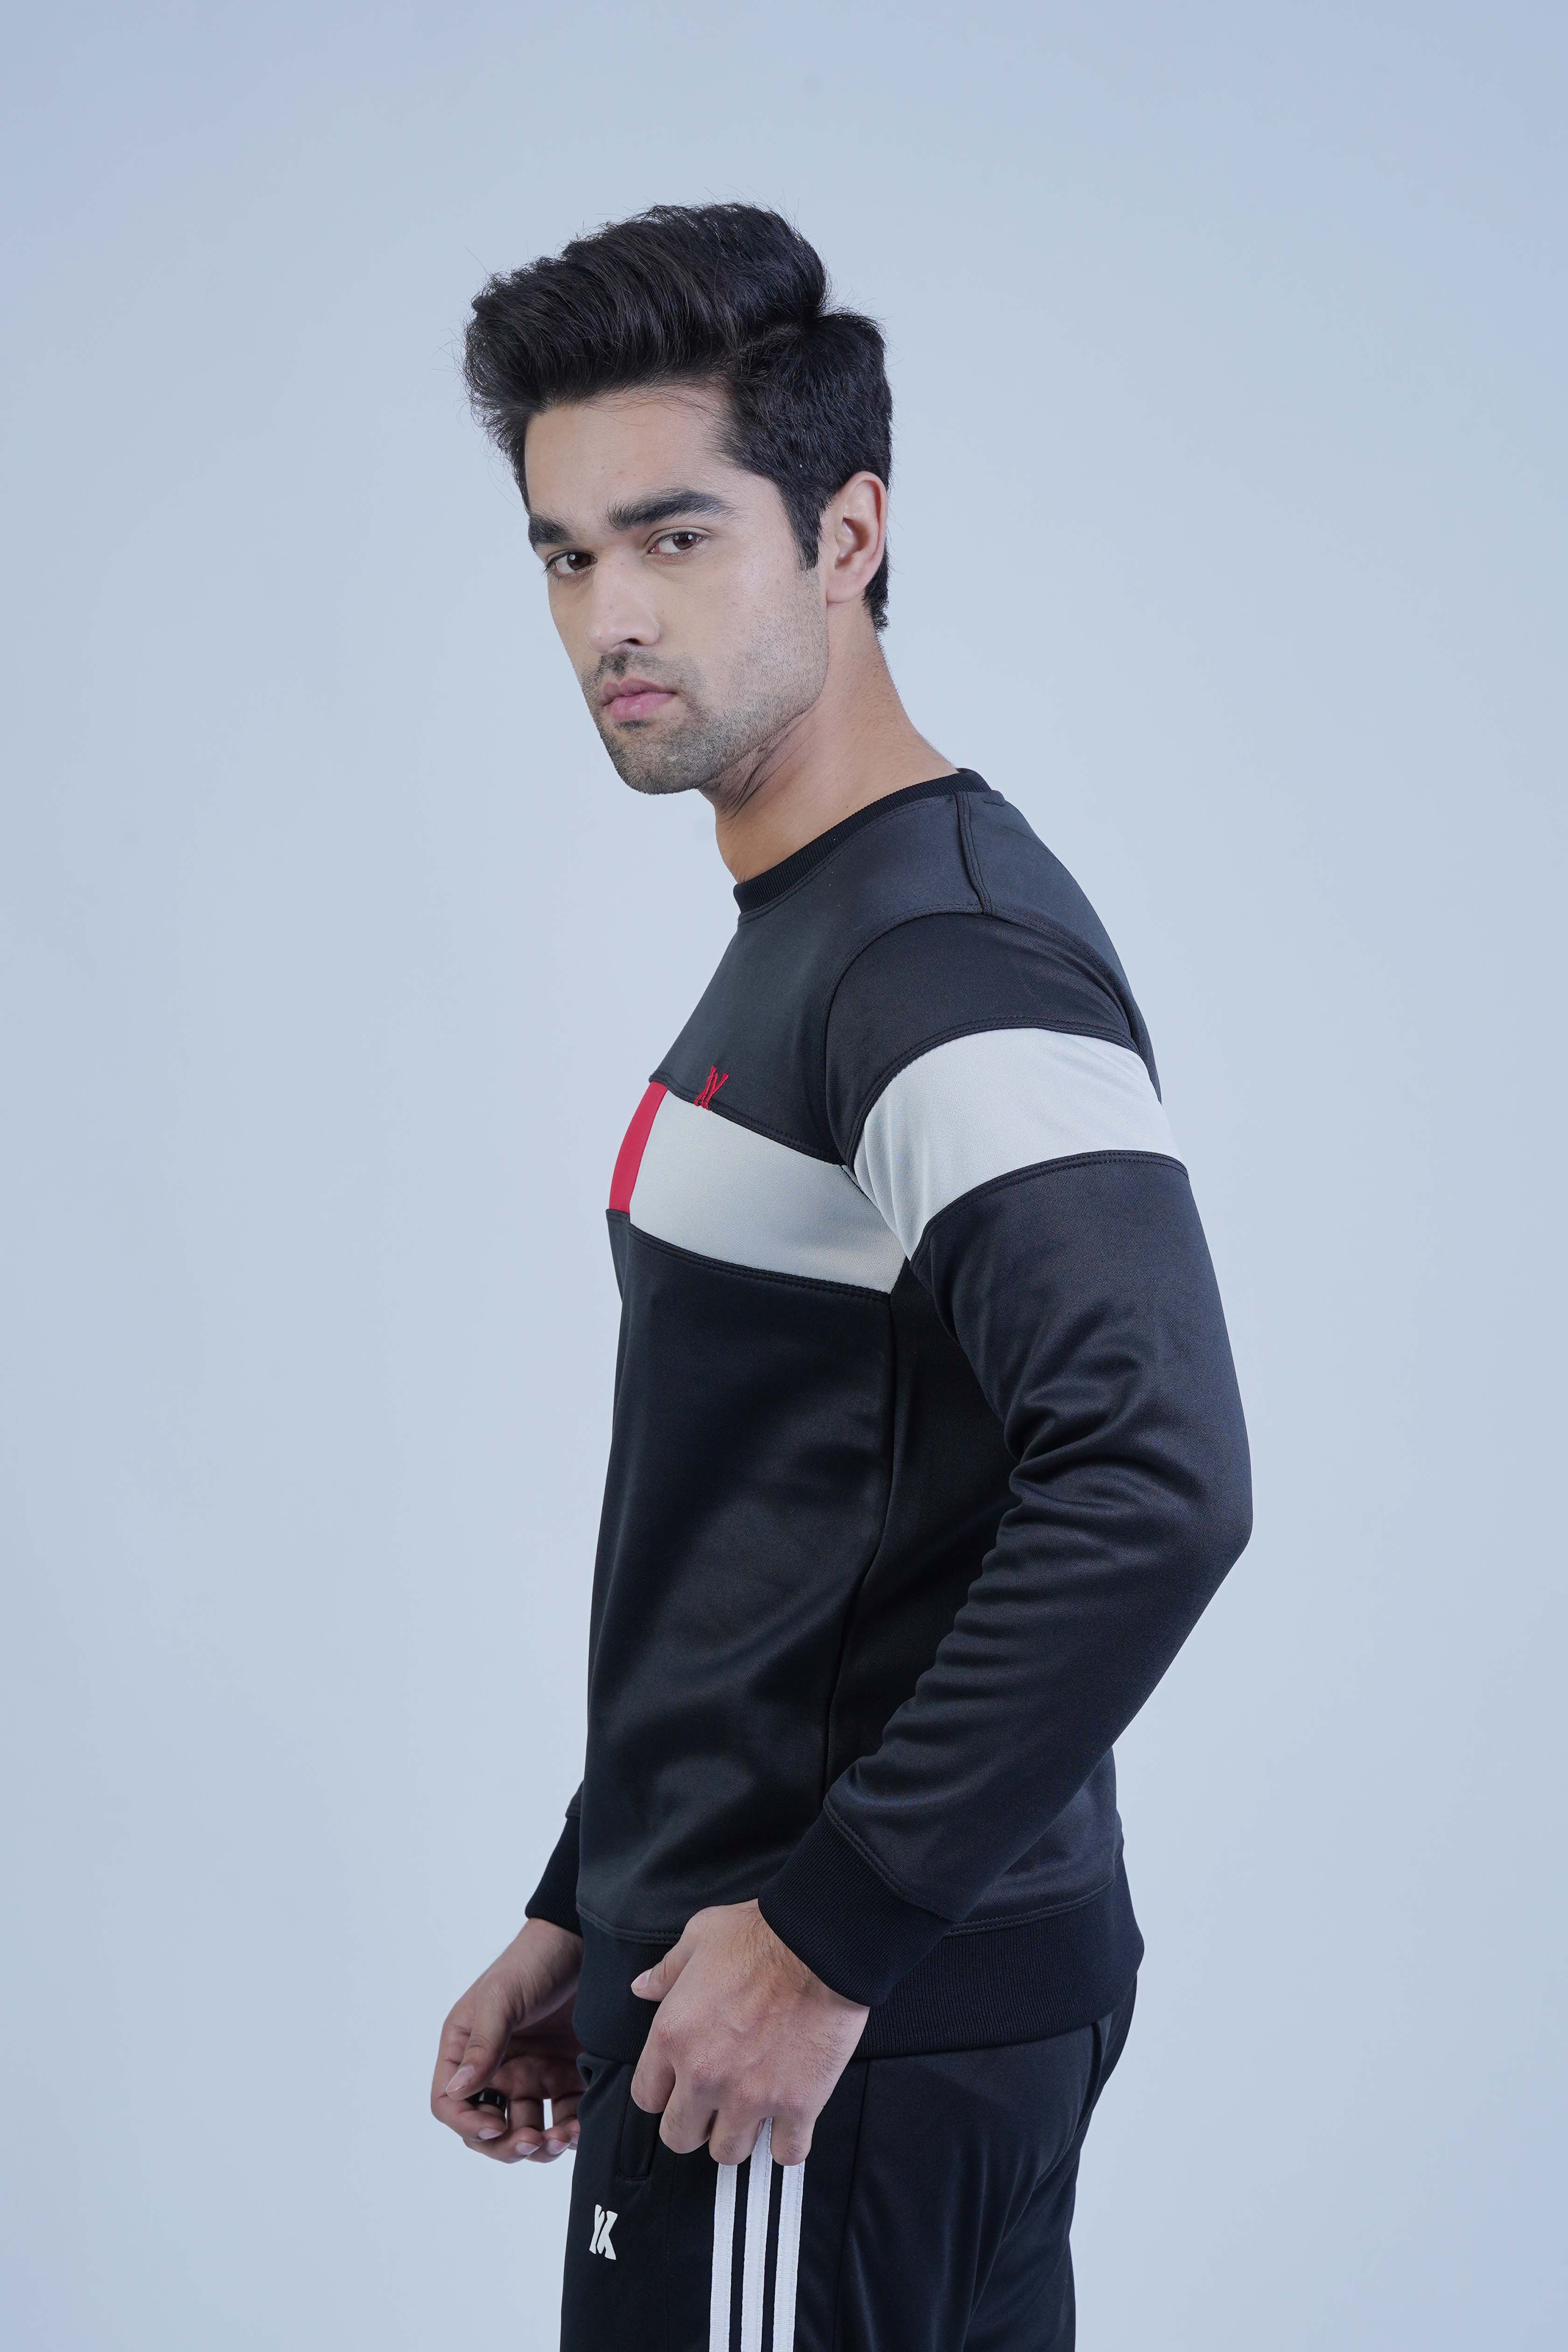 Urban Stripe Black Sweatshirt - The Xea Collection